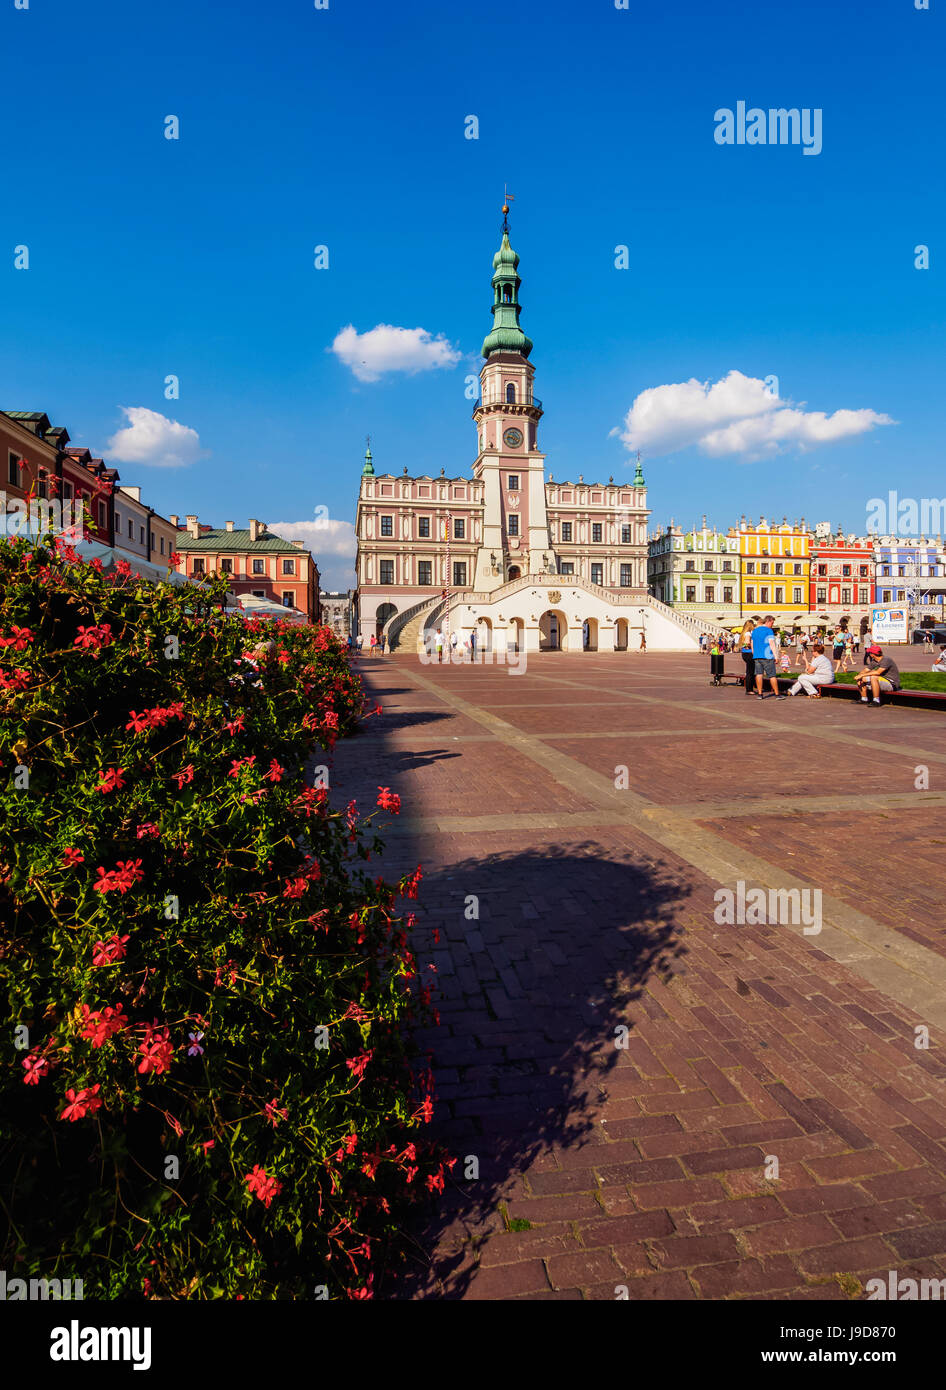 Marktplatz und Rathaus, Altstadt, UNESCO World Heritage Site, Zamosc, Lublin Woiwodschaft, Polen, Europa Stockfoto